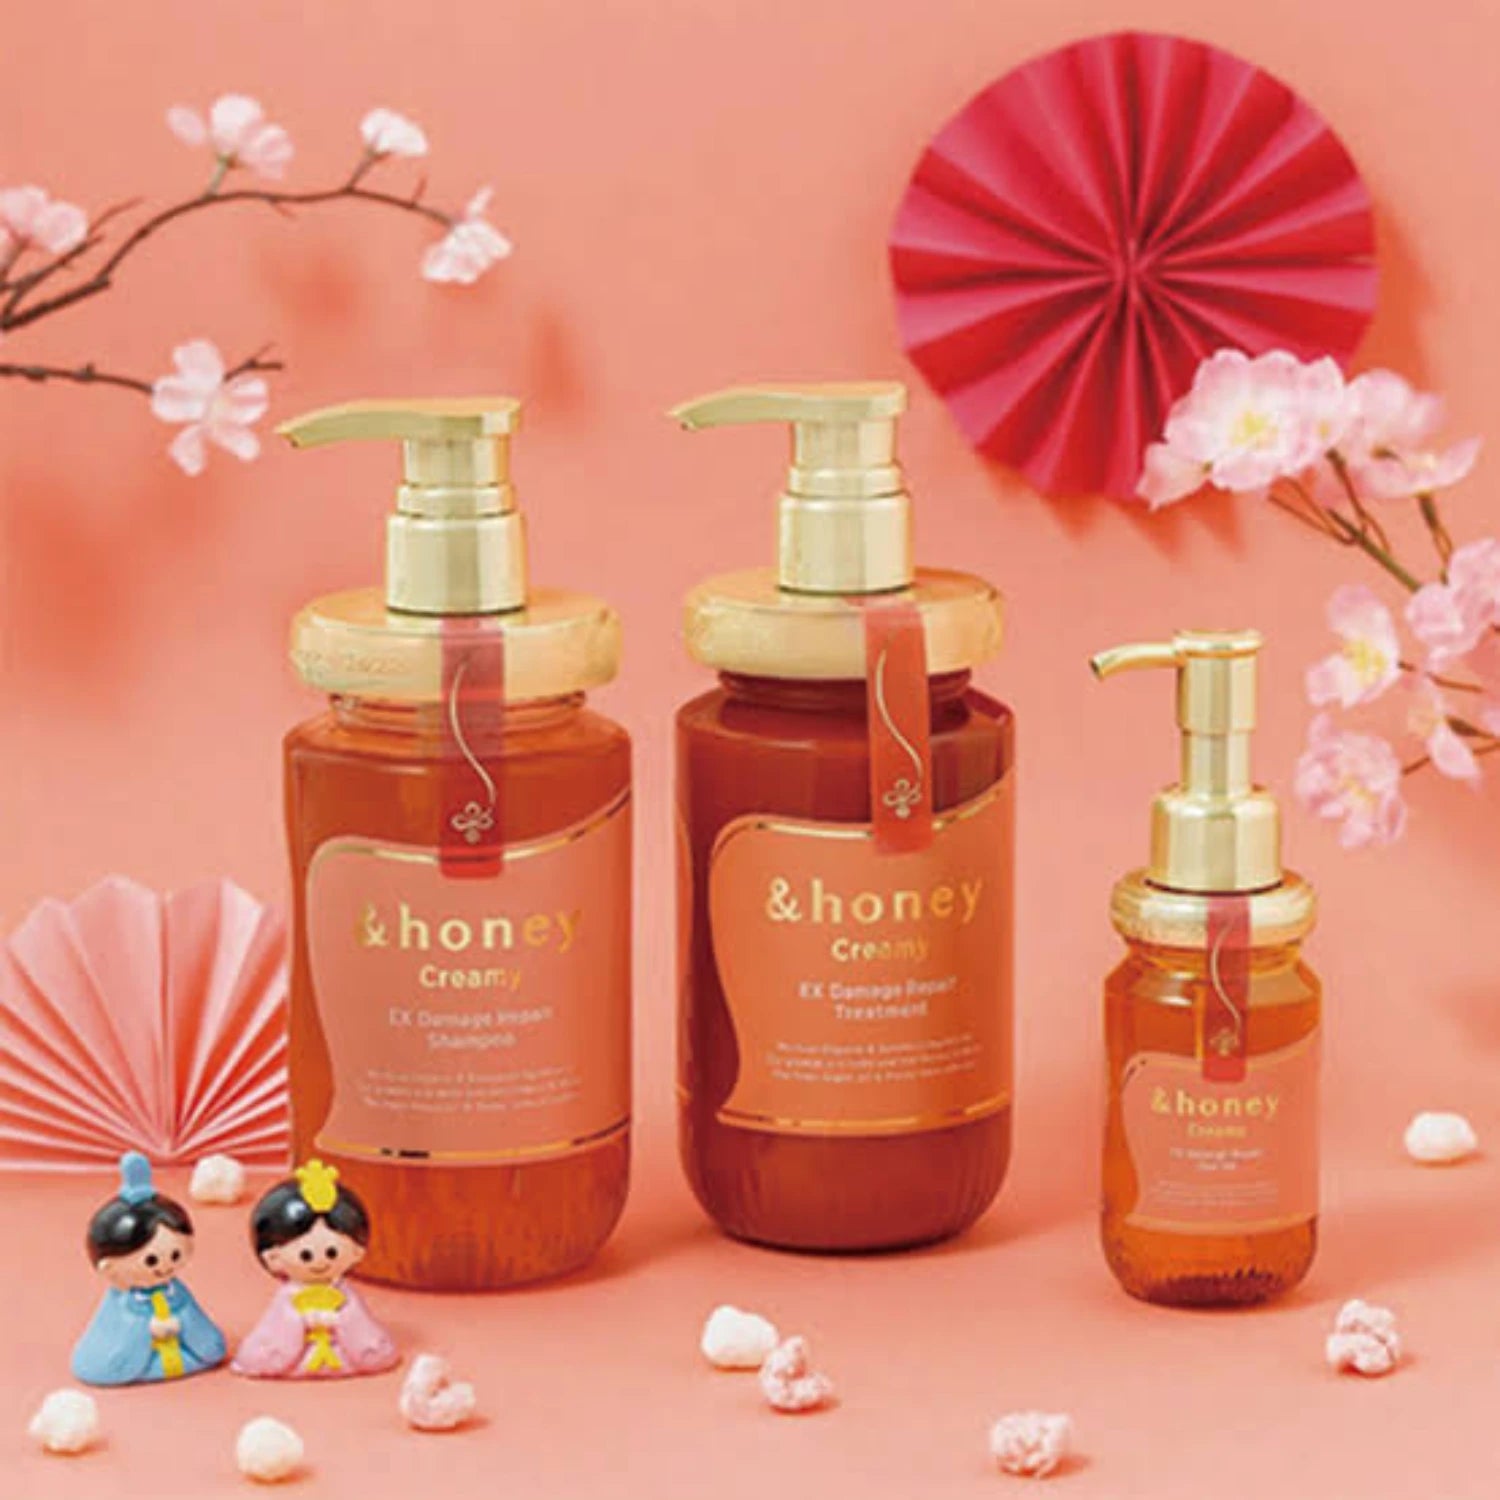 & Honey Creamy EX Damage Repair Shampoo, Treatment & Hair Oil Set 440ml Each + 100ml - Buy Me Japan